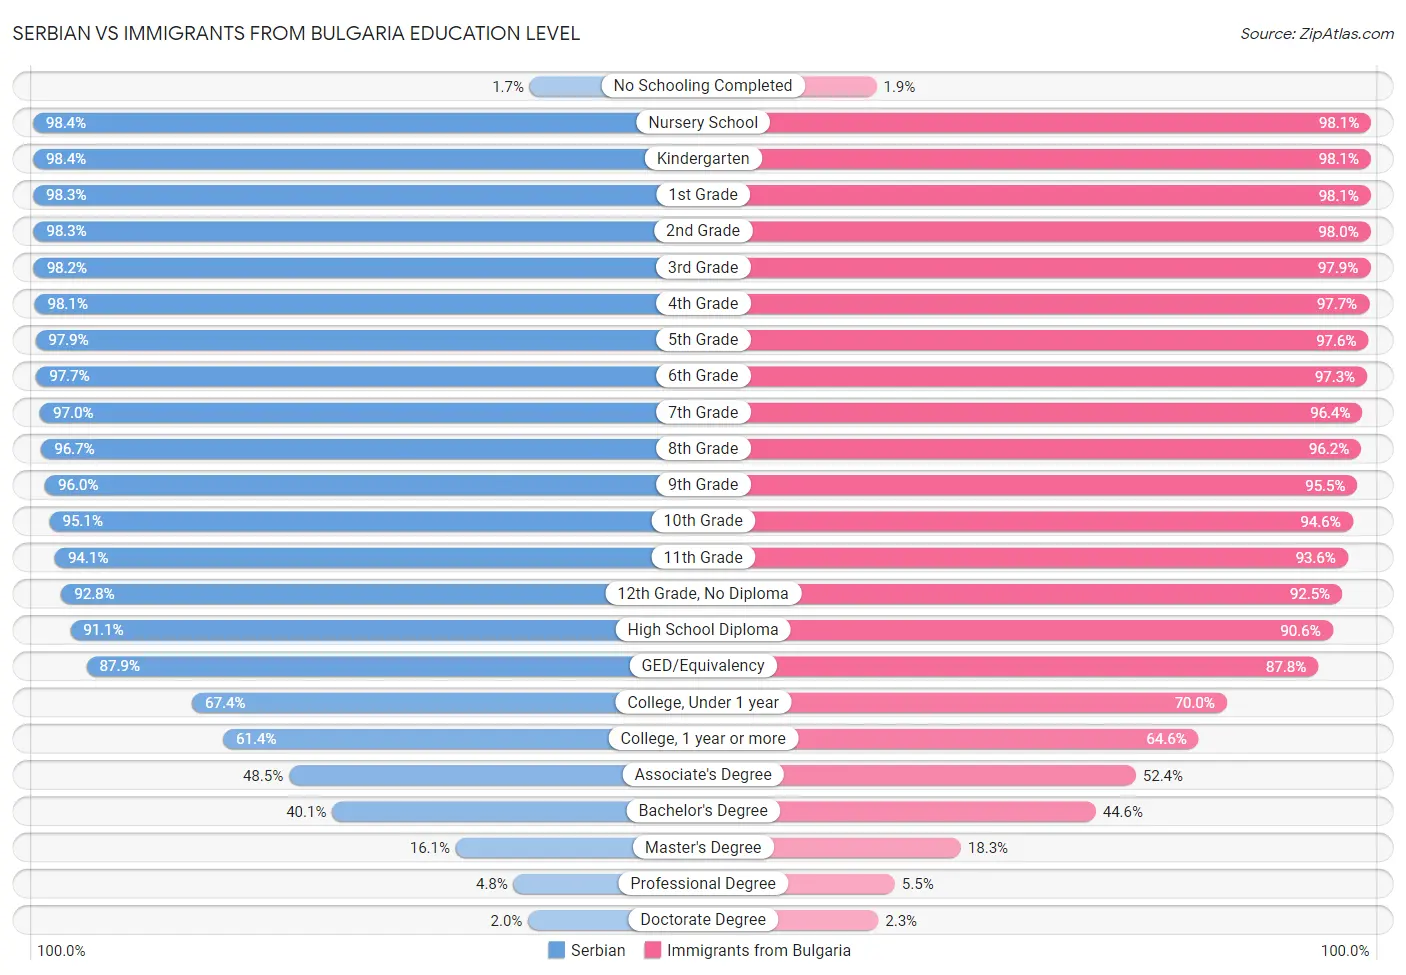 Serbian vs Immigrants from Bulgaria Education Level